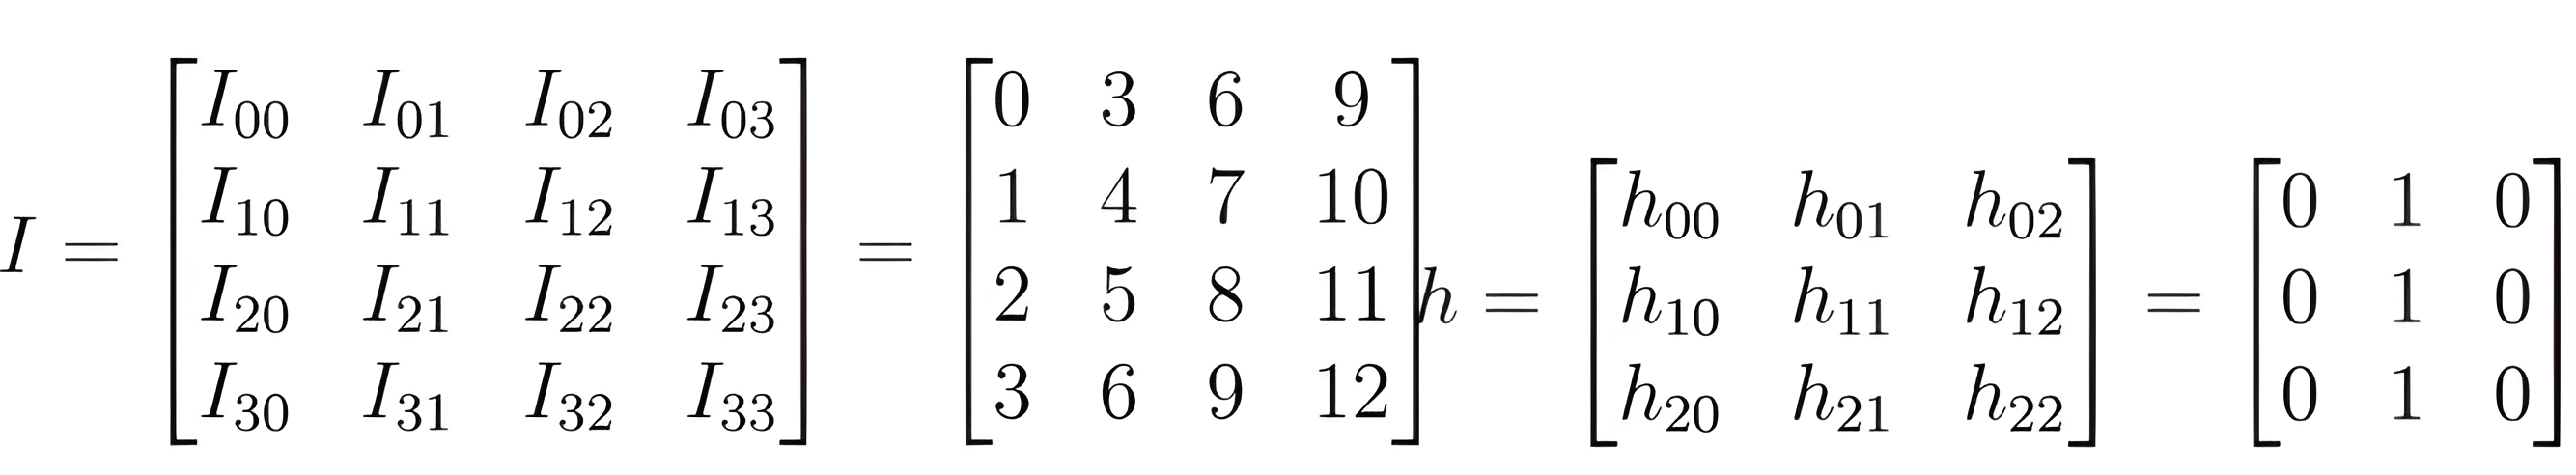 Convolution formula 2